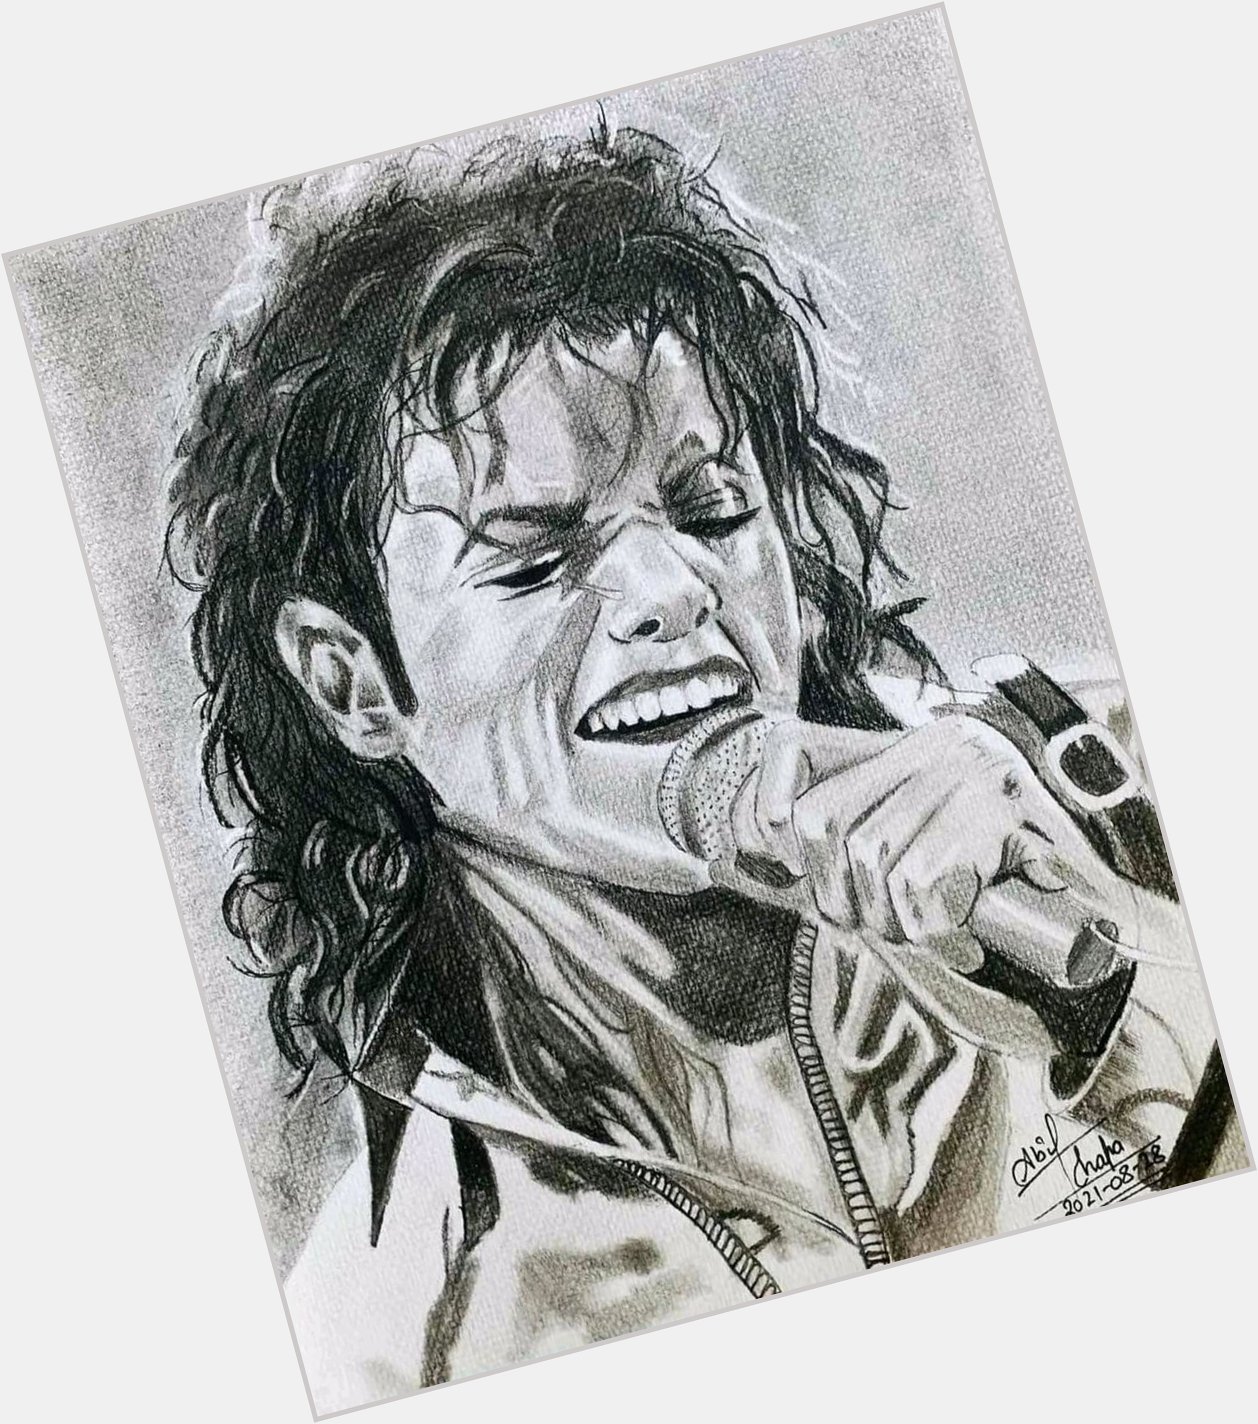 Happy birthday to the \"King of Pop\" Michael Jackson 